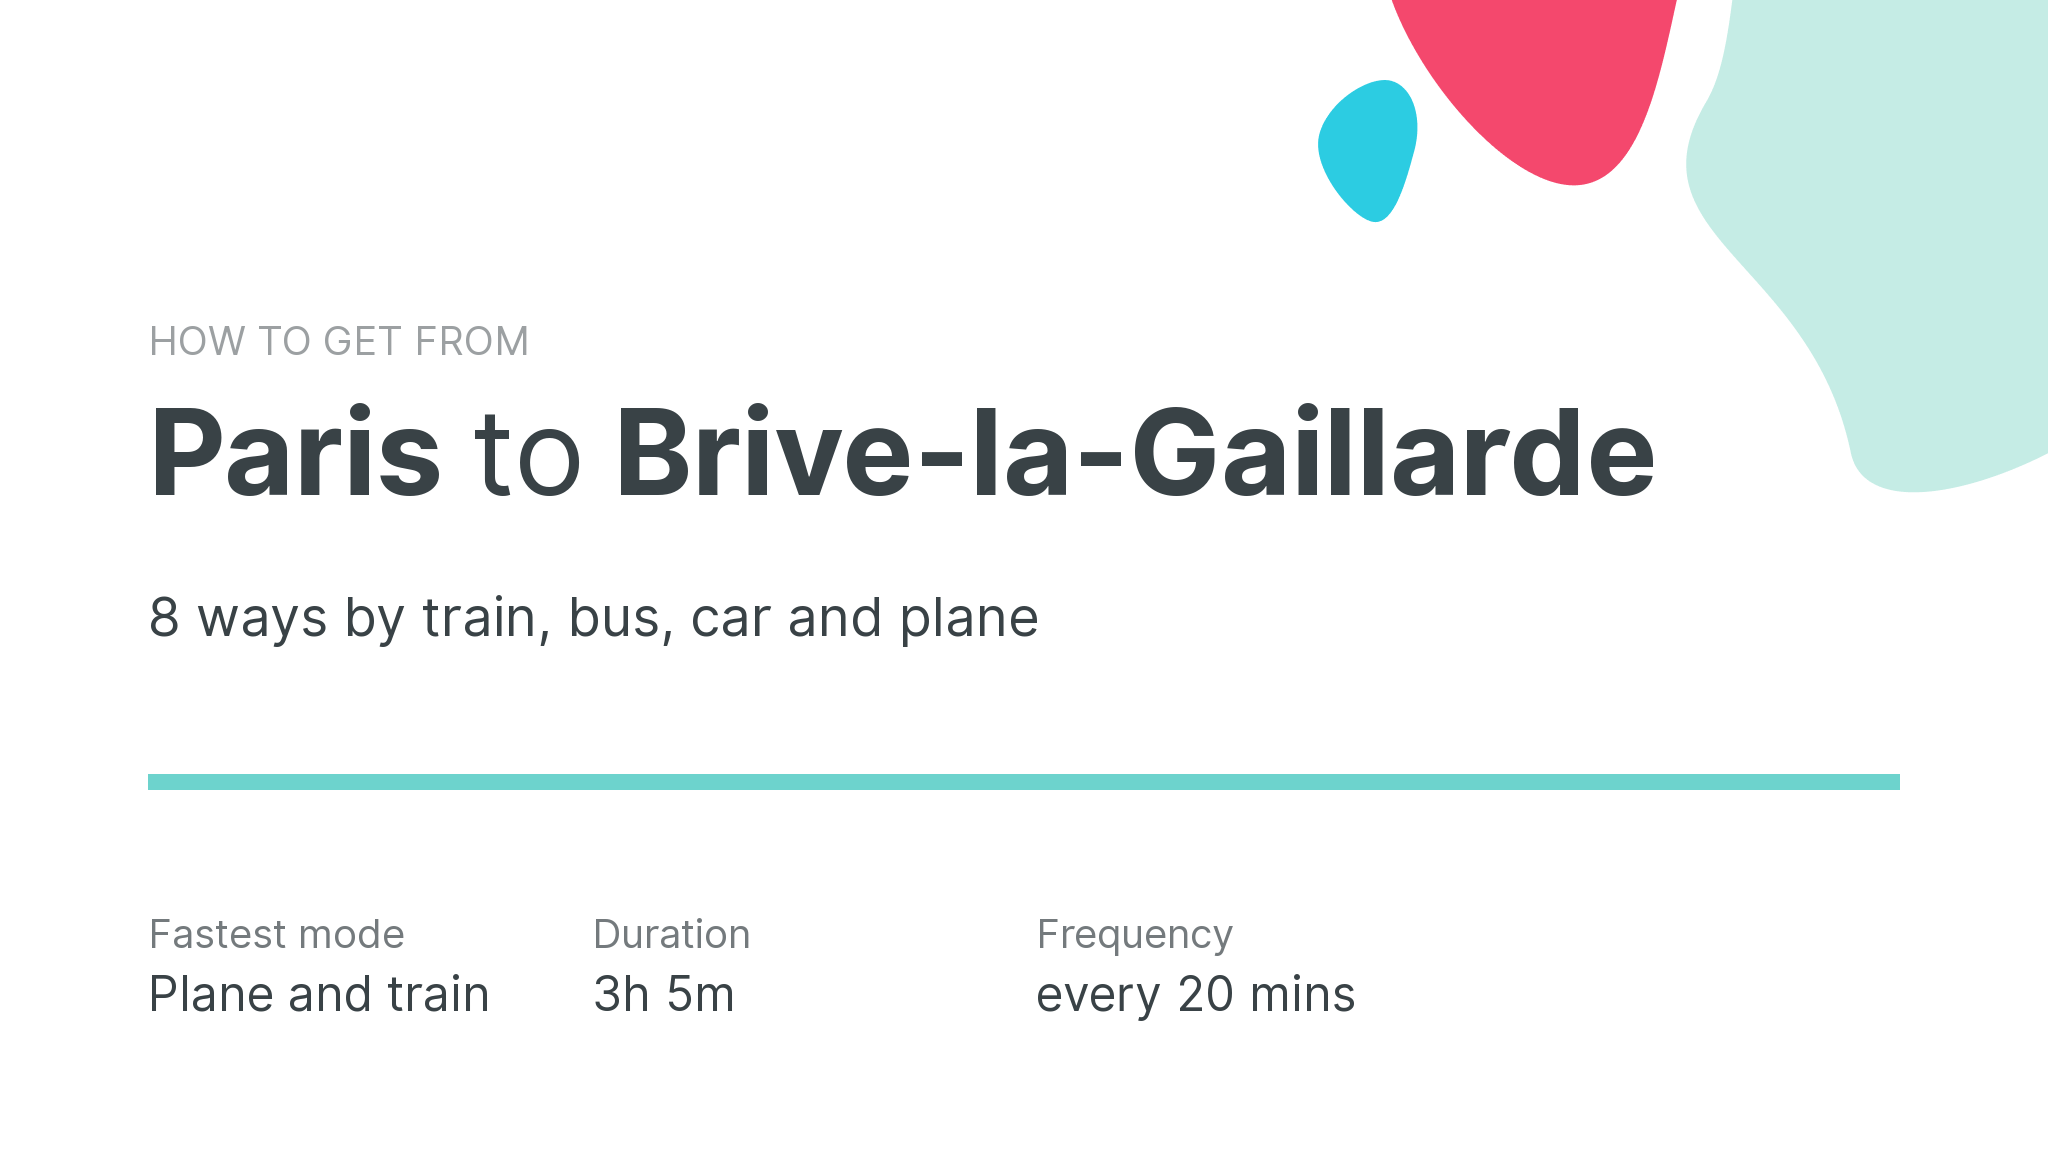 How do I get from Paris to Brive-la-Gaillarde